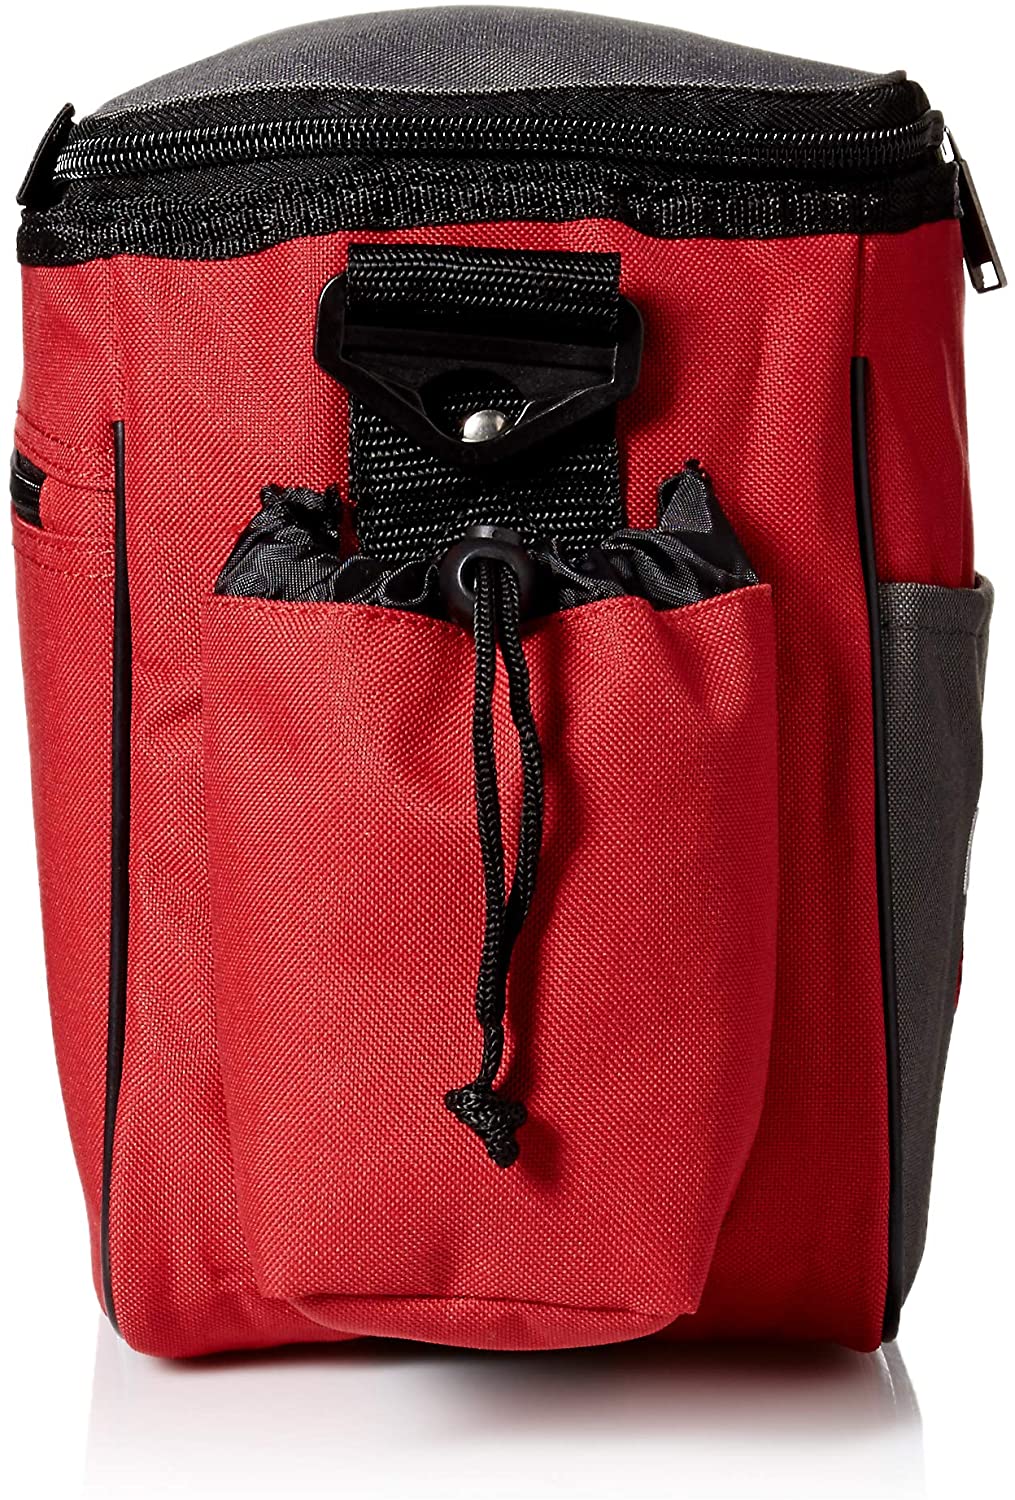 Innova Standard Bag - Red/Grey